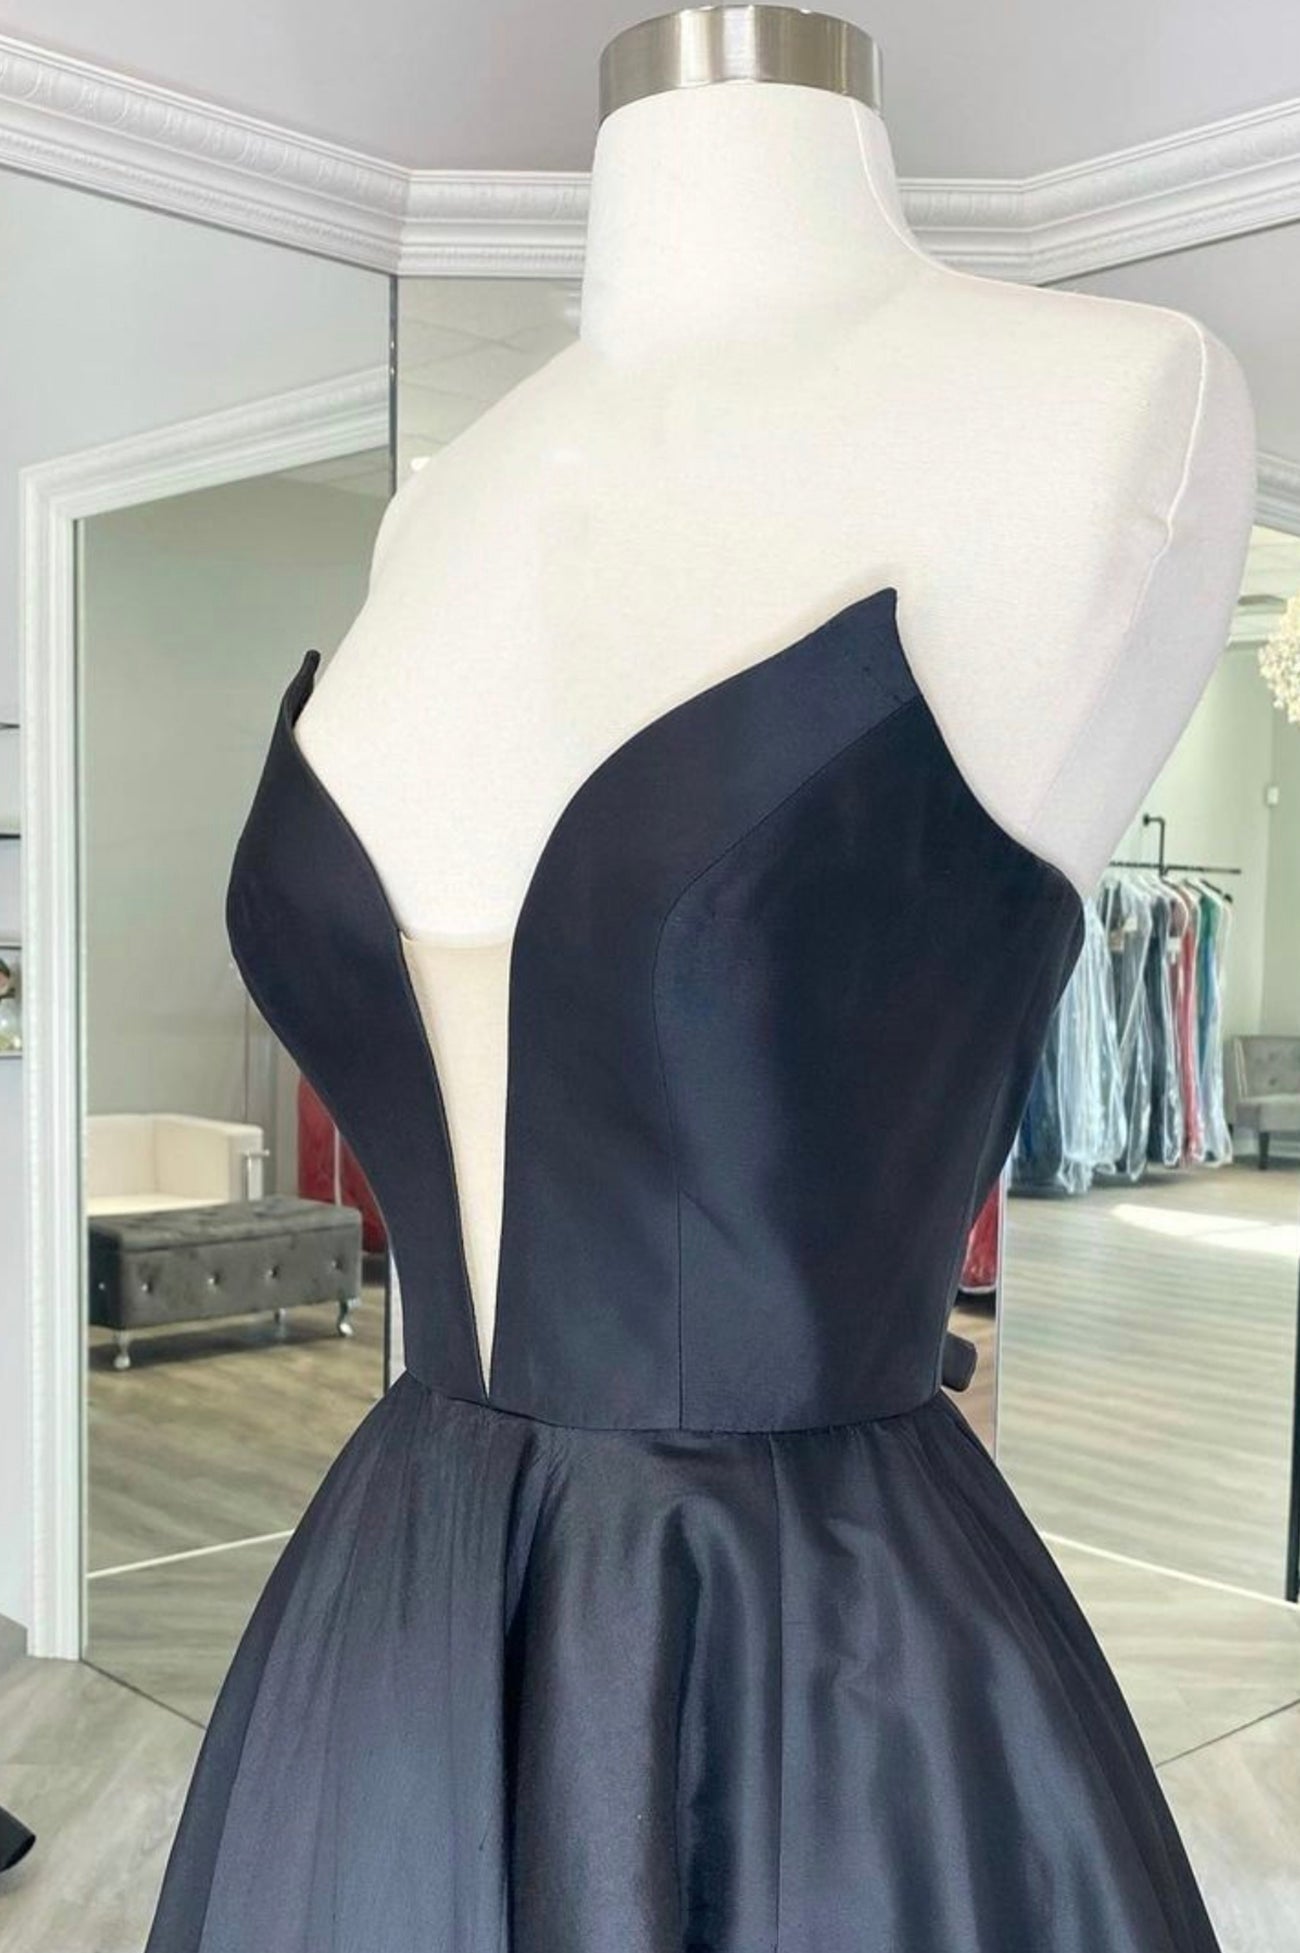 Black Strapless Satin Floor Length A-Line Prom Dress